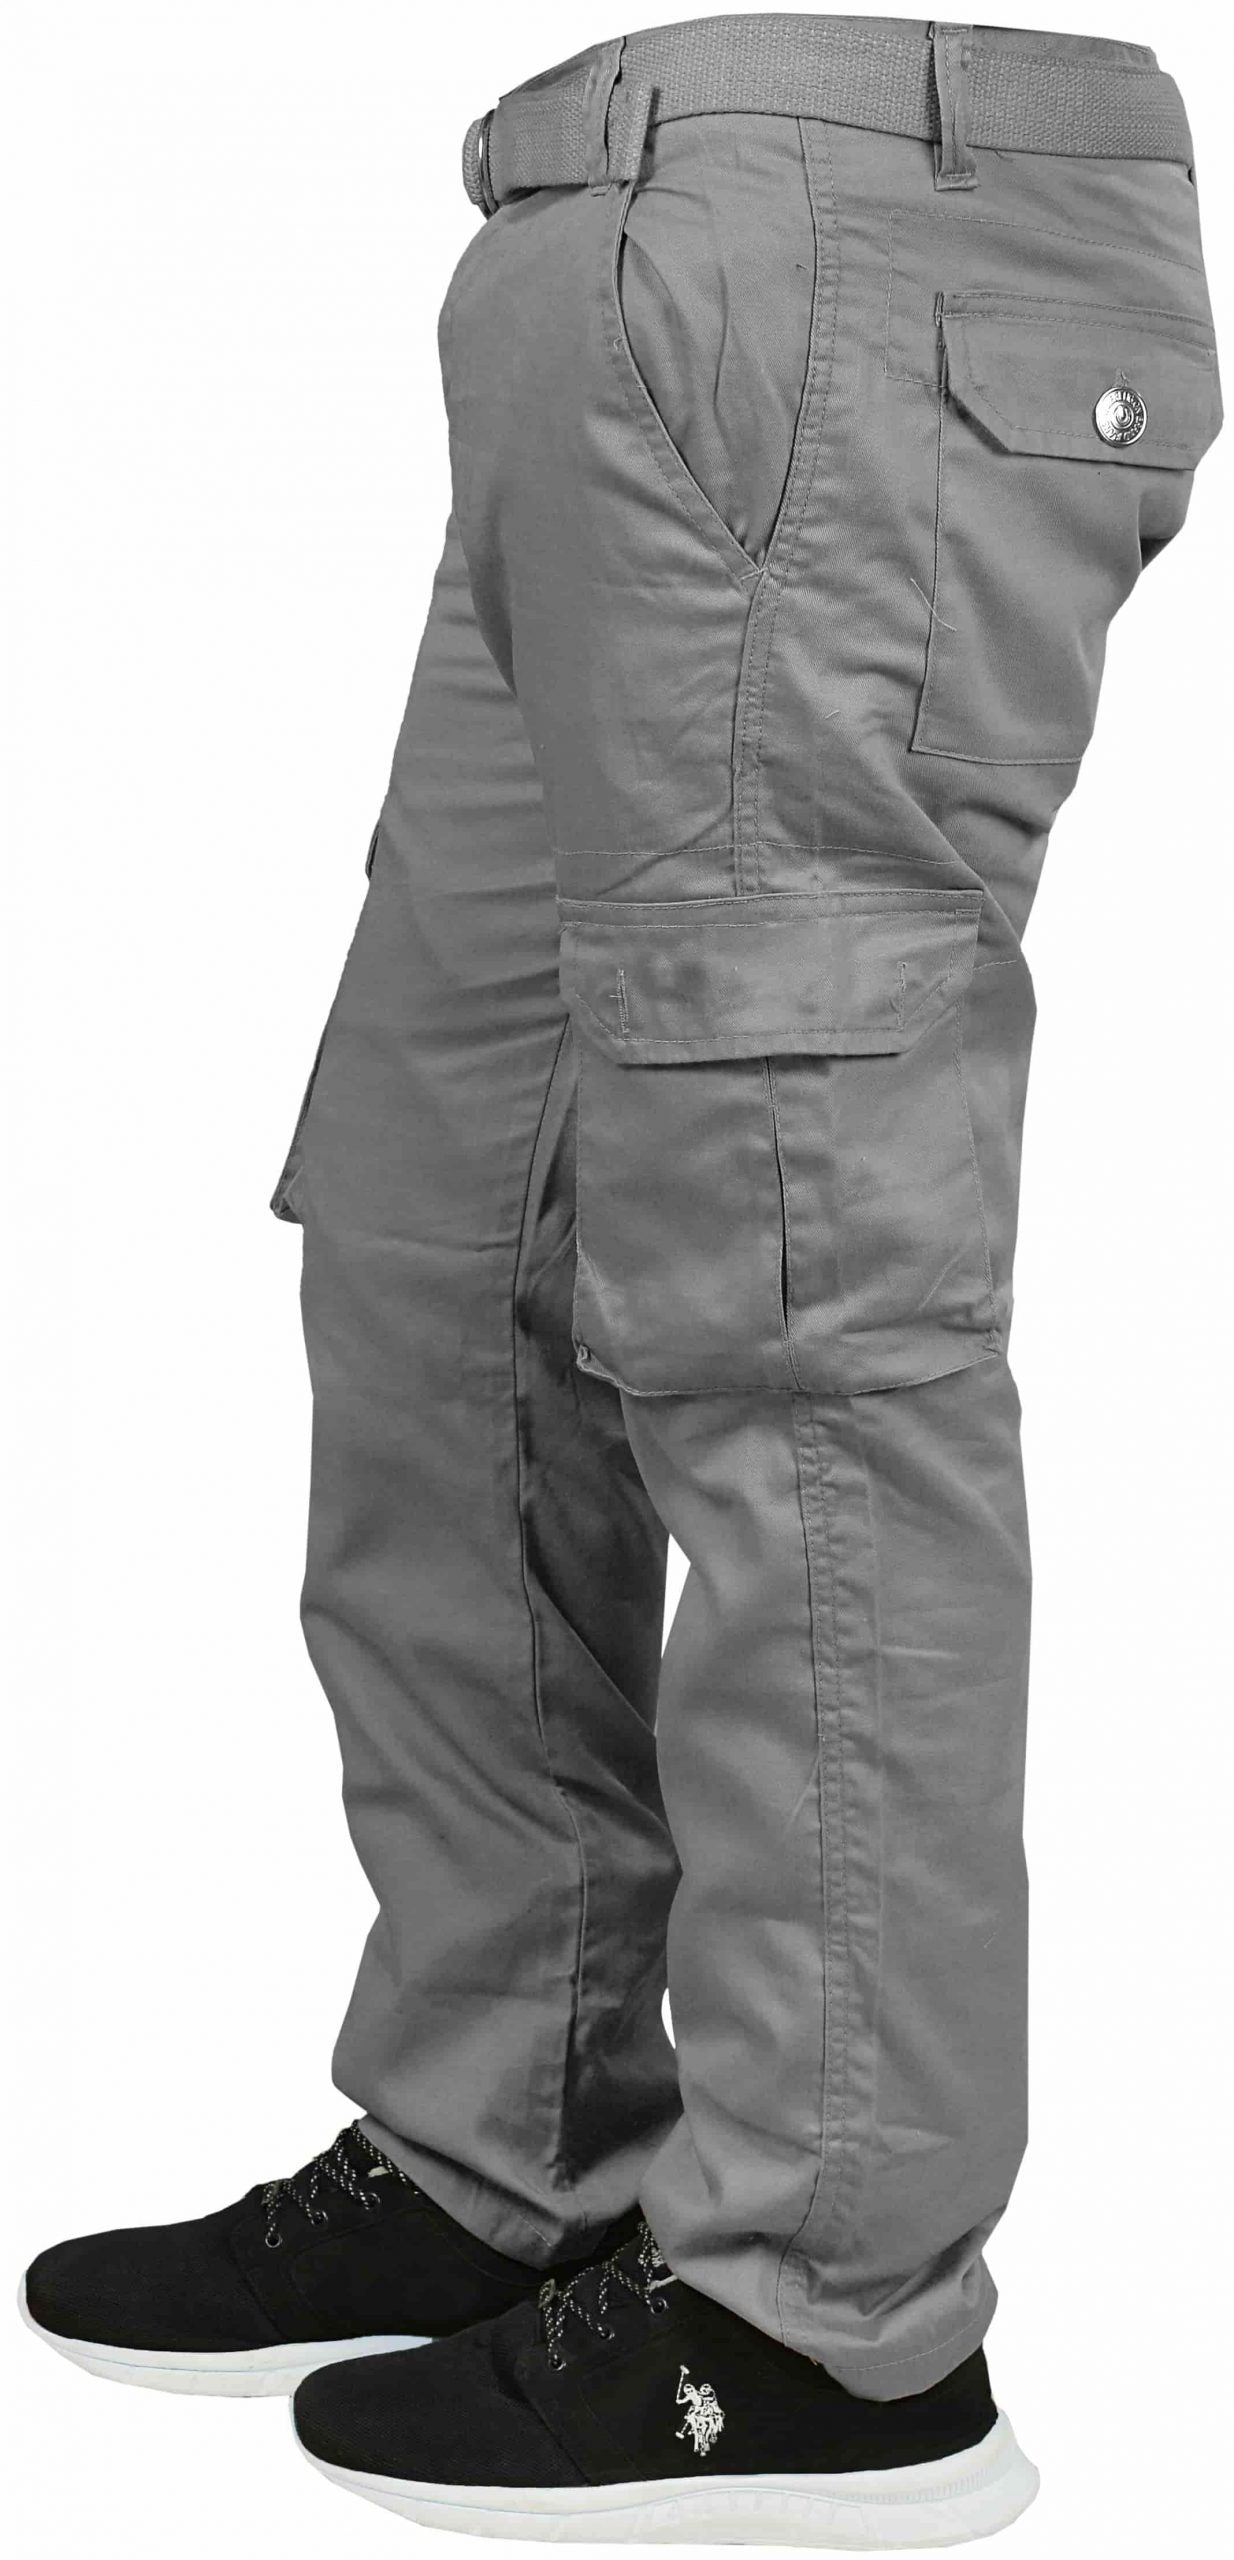 Men’s Basic Uniform Cargo Pants with 6 pockets and Matching Belt